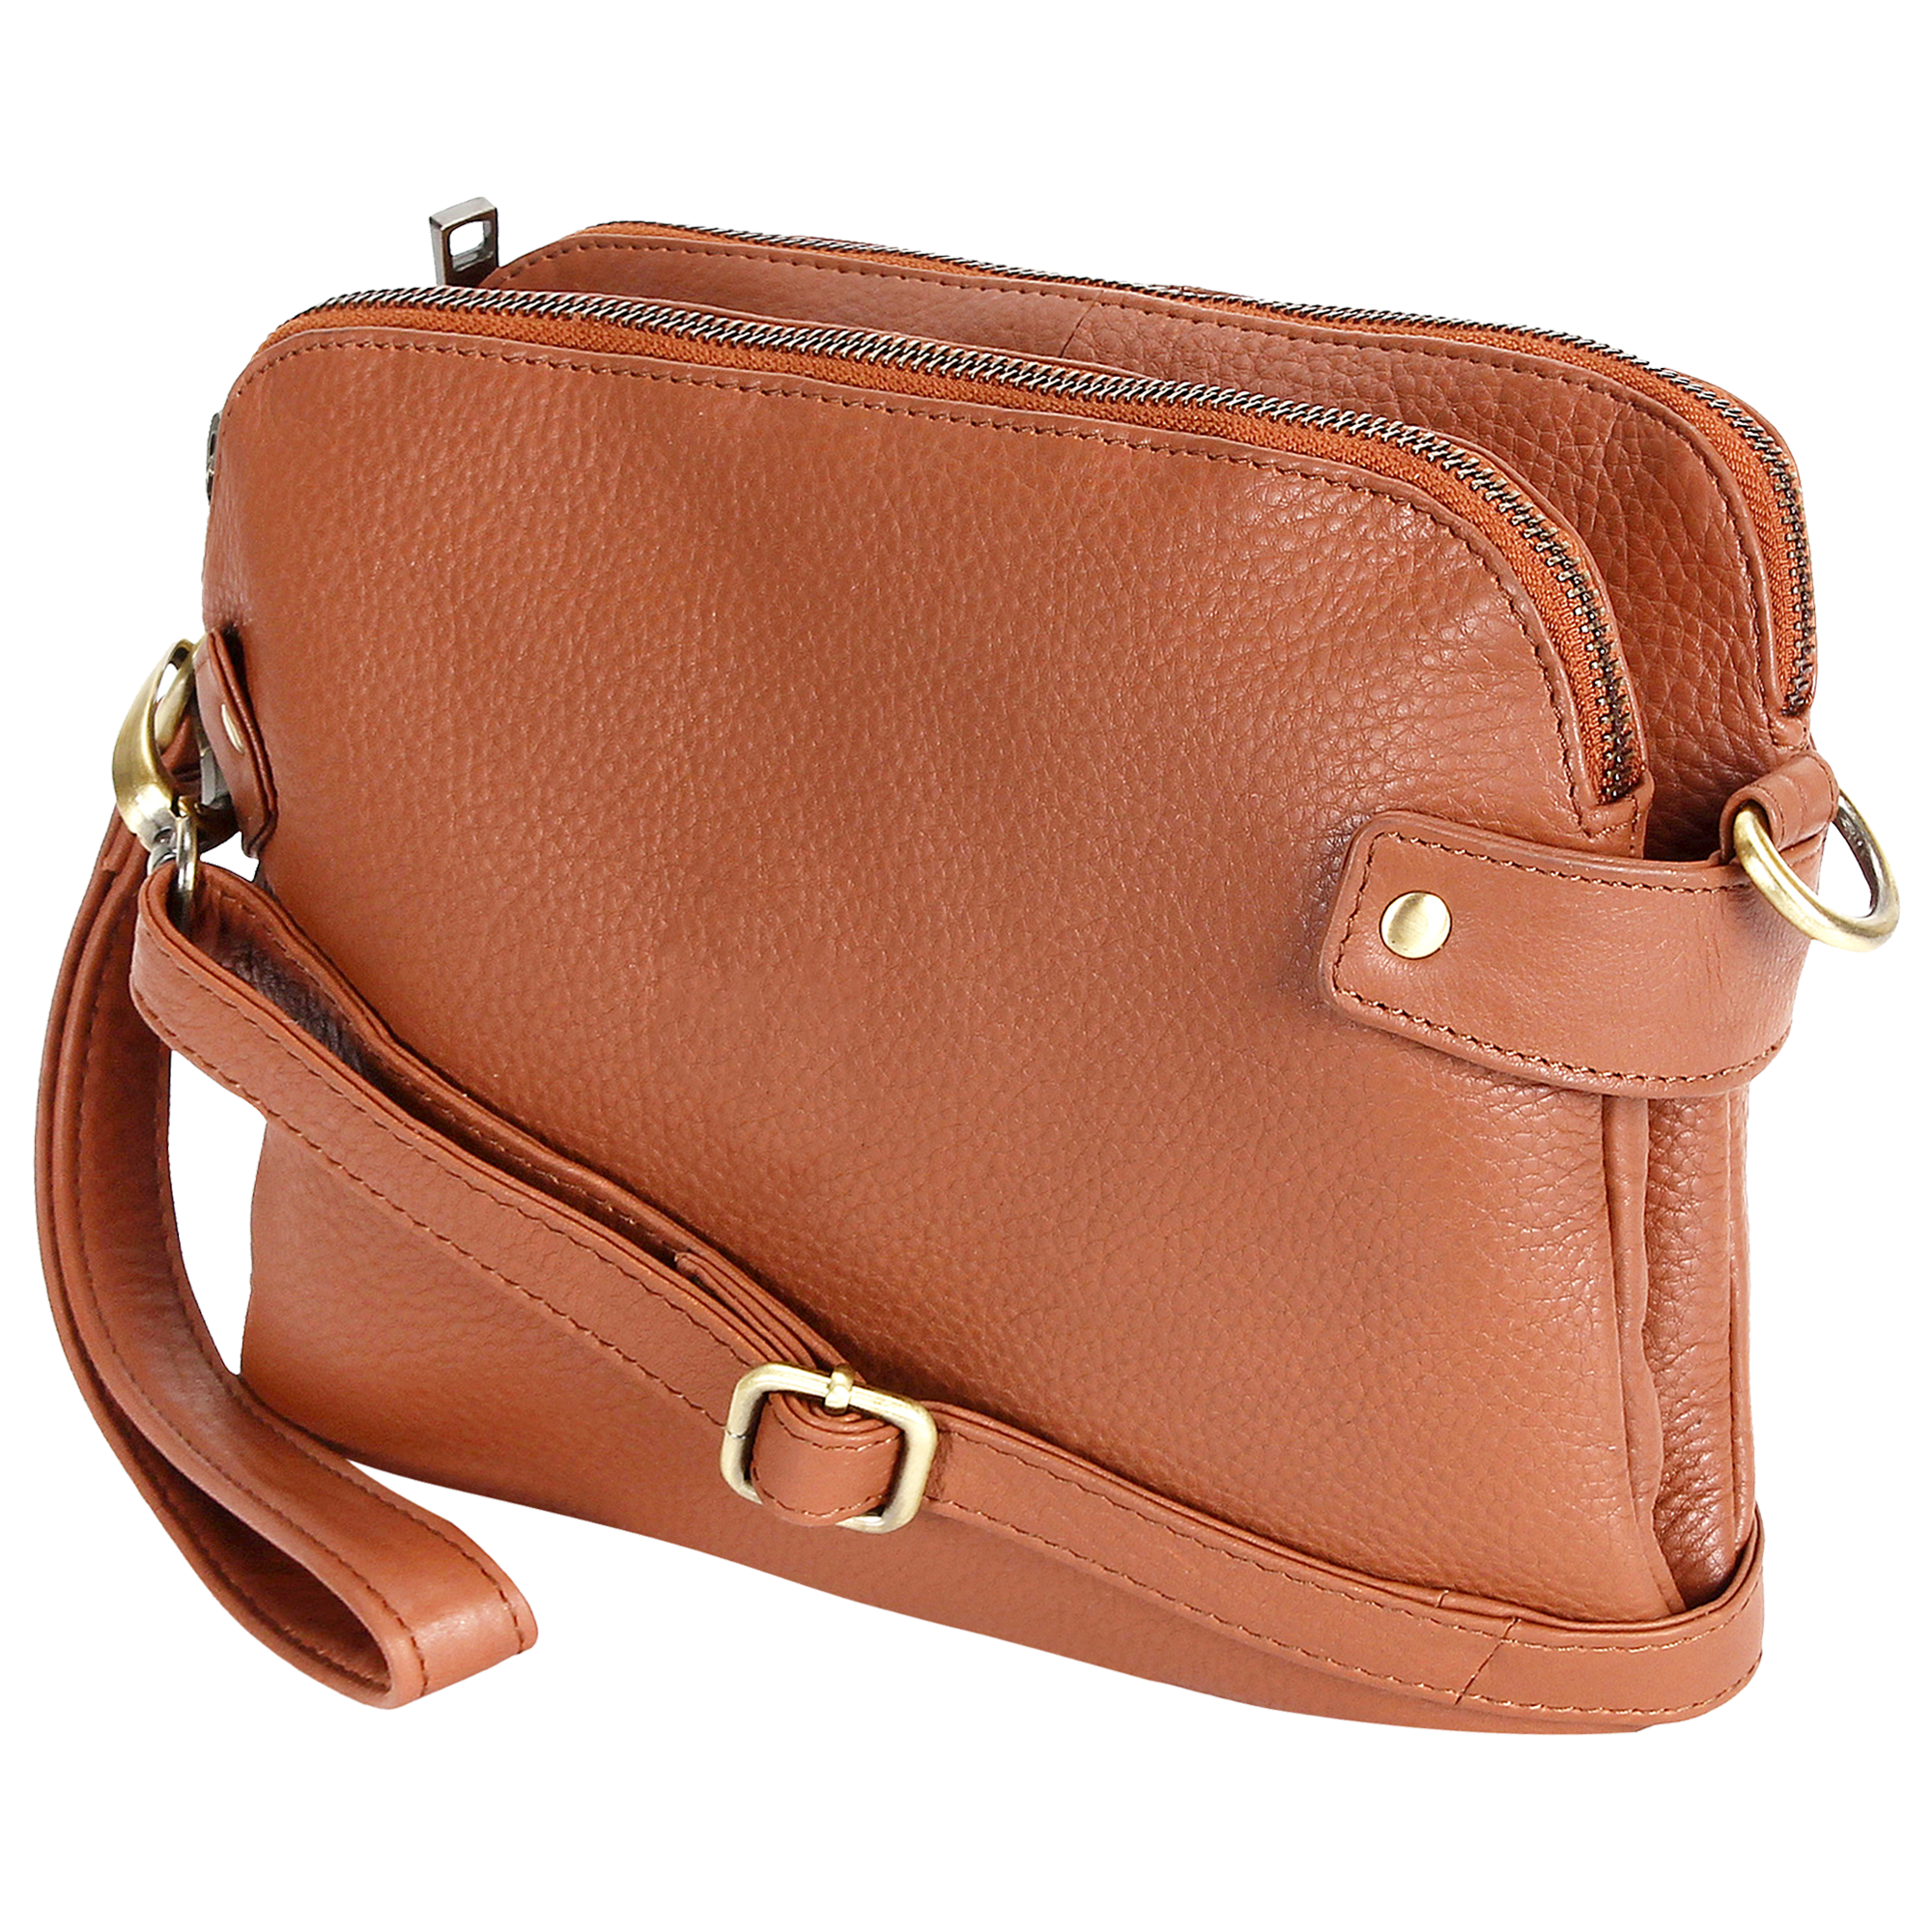 Wristlet Wallet, Leather Clutch Wallets for Women (10 inch, Brown) - Rustic Town